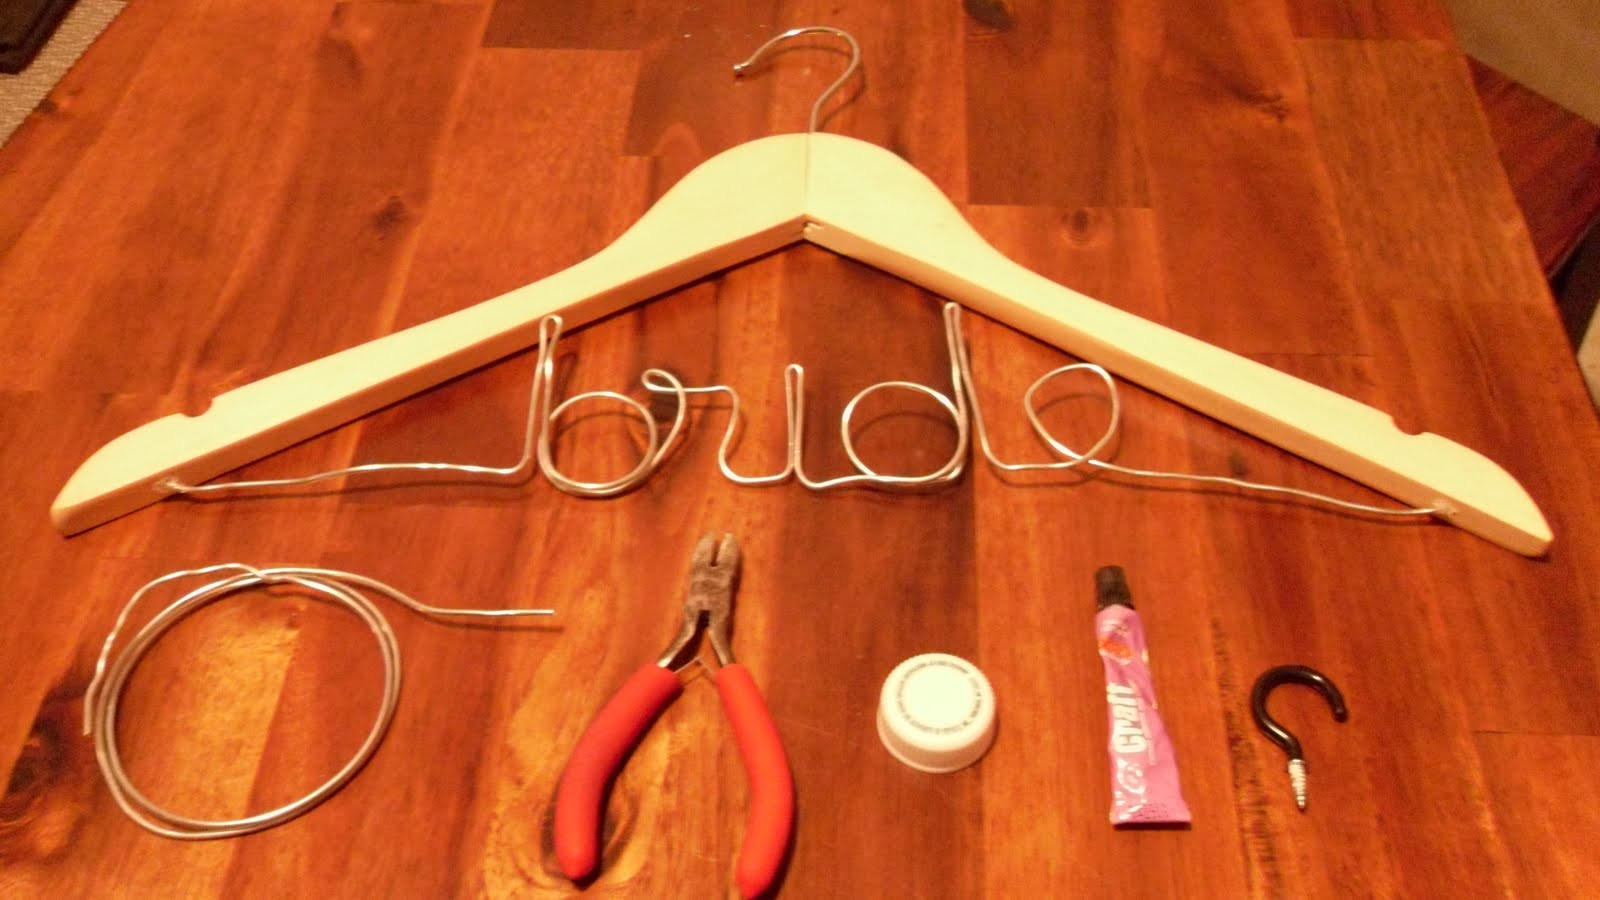 Best ideas about DIY Wedding Hanger
. Save or Pin Jarring Impact DIY Wire Wedding Hanger Tutorial Now.